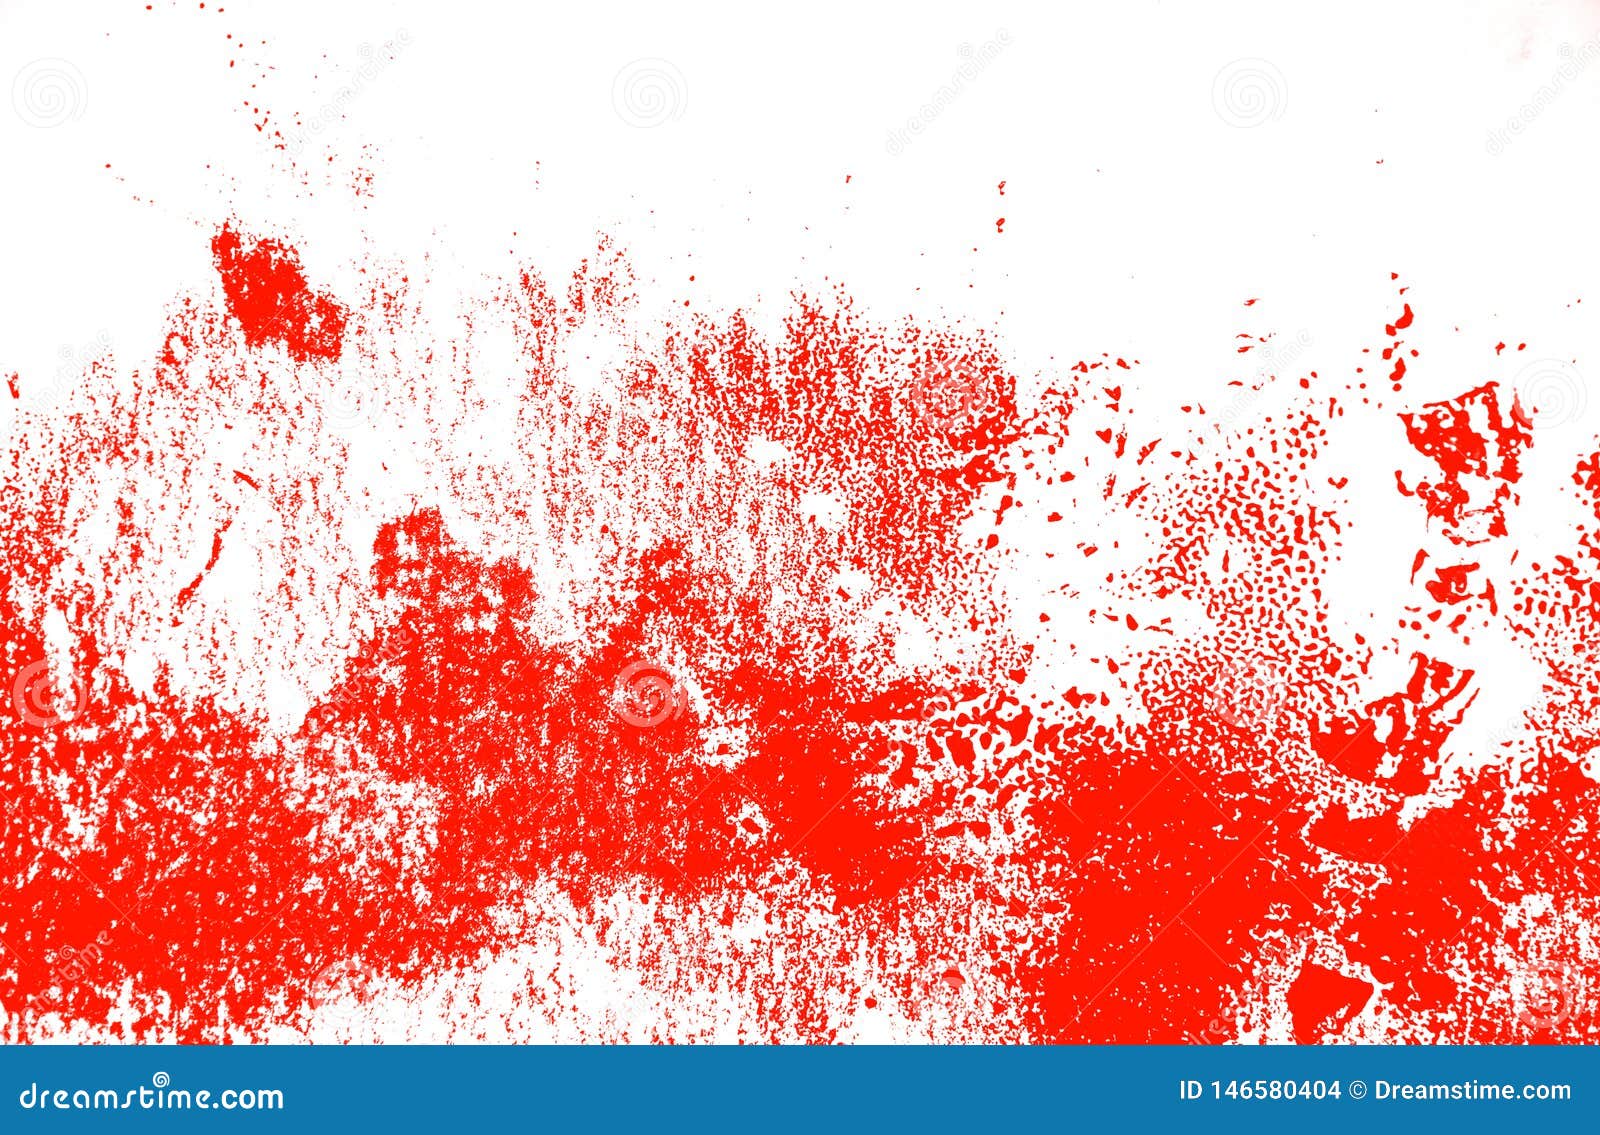 White Red Paint Brush Strokes Background Stock Photo - Image of decorative,  element: 146580404